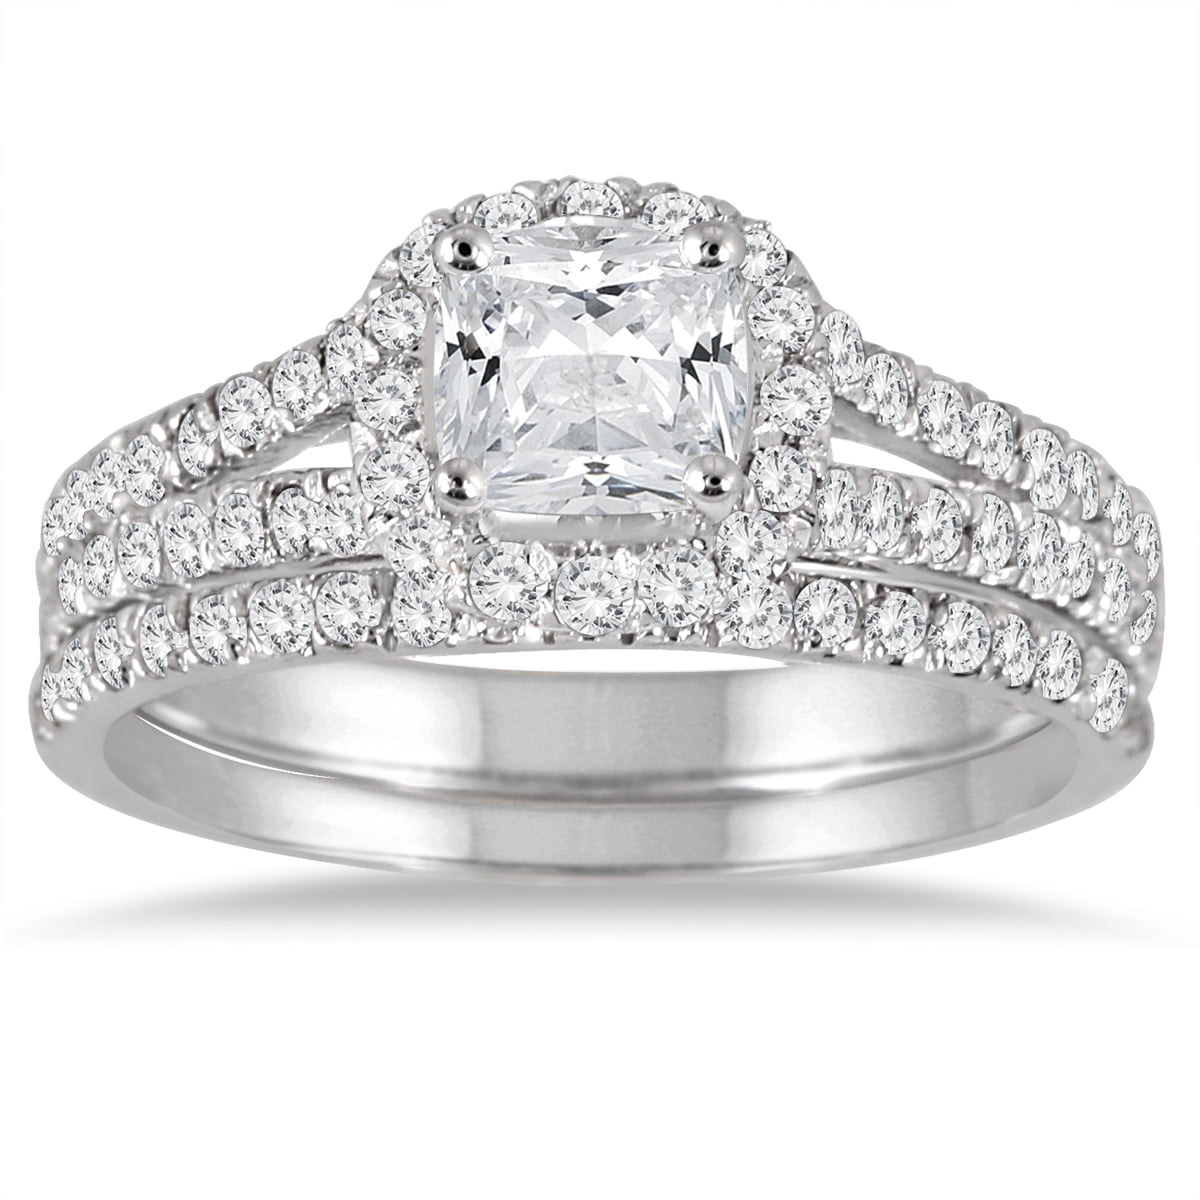 3 CT Round Cut VVS1 Diamond Bridal Wedding Engagement Ring 14k White Gold Over 